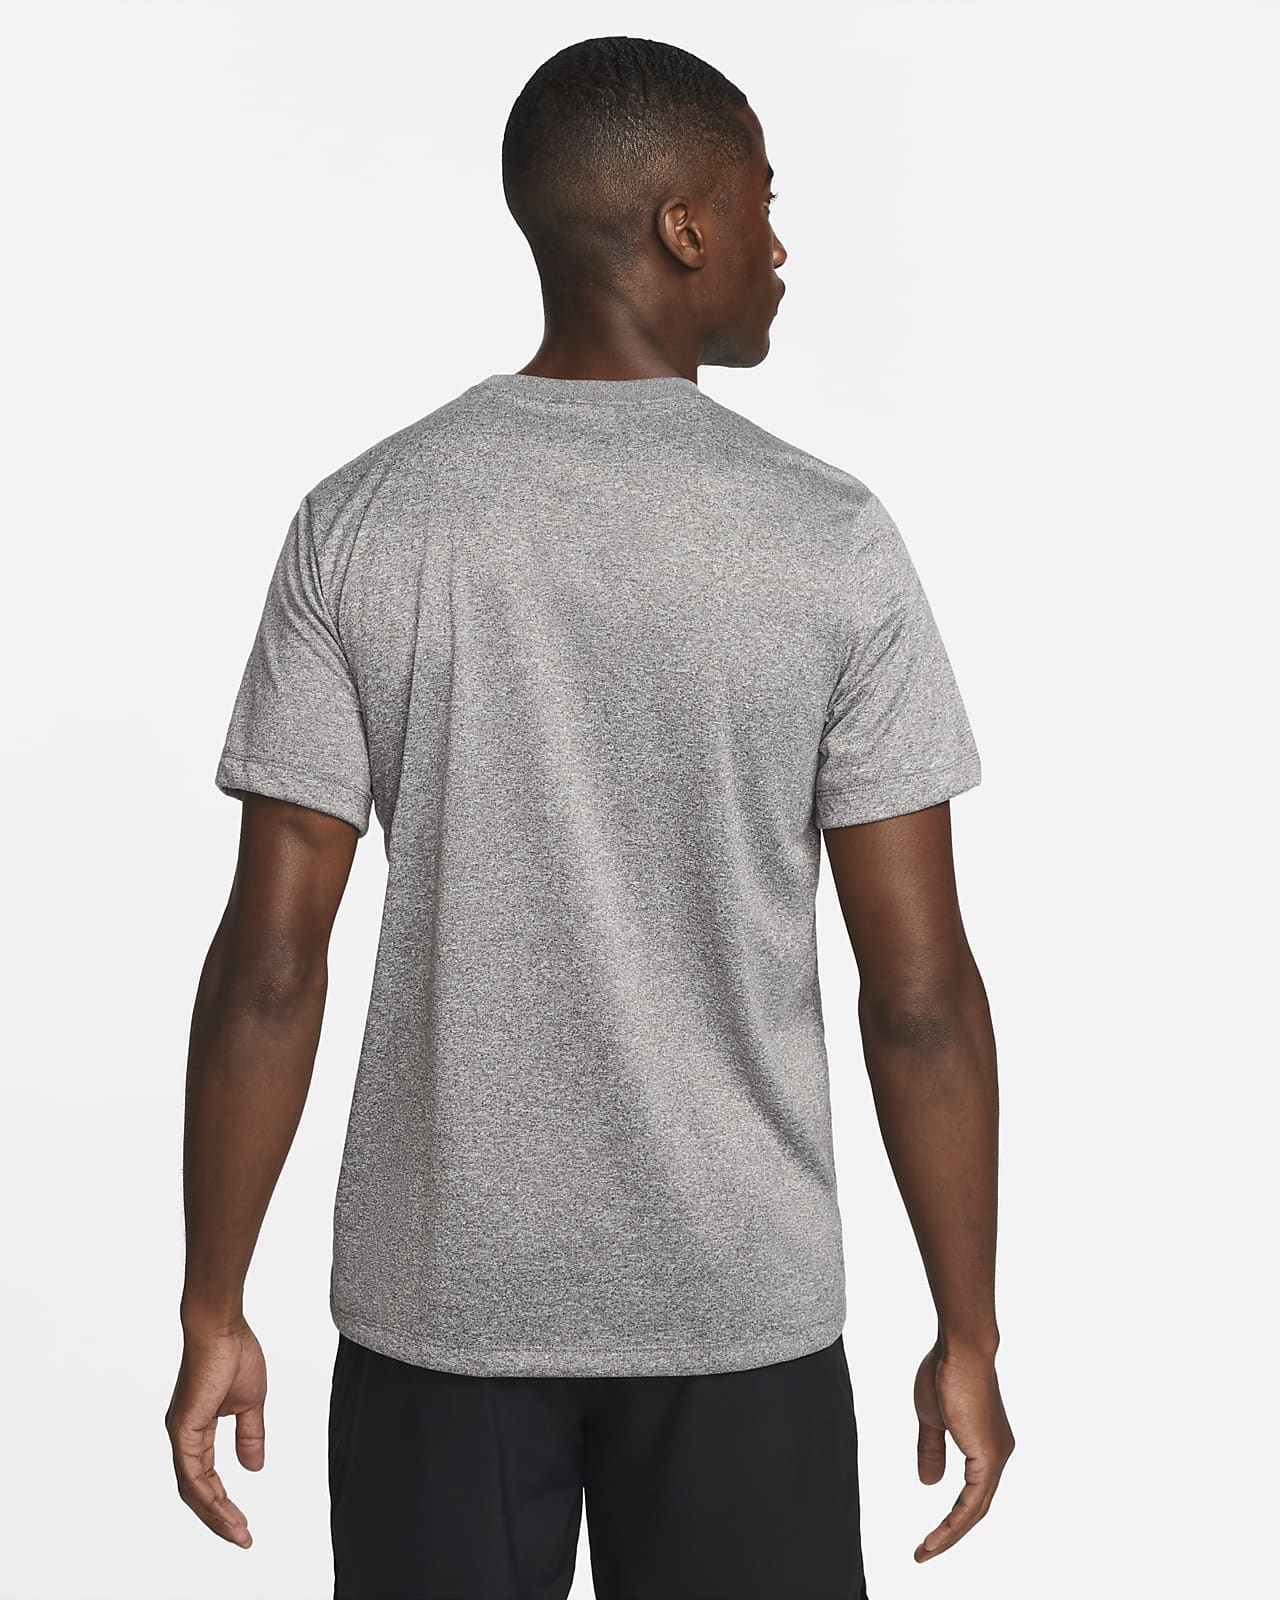 Legend Men's Fitness T-Shirt. Nike.com